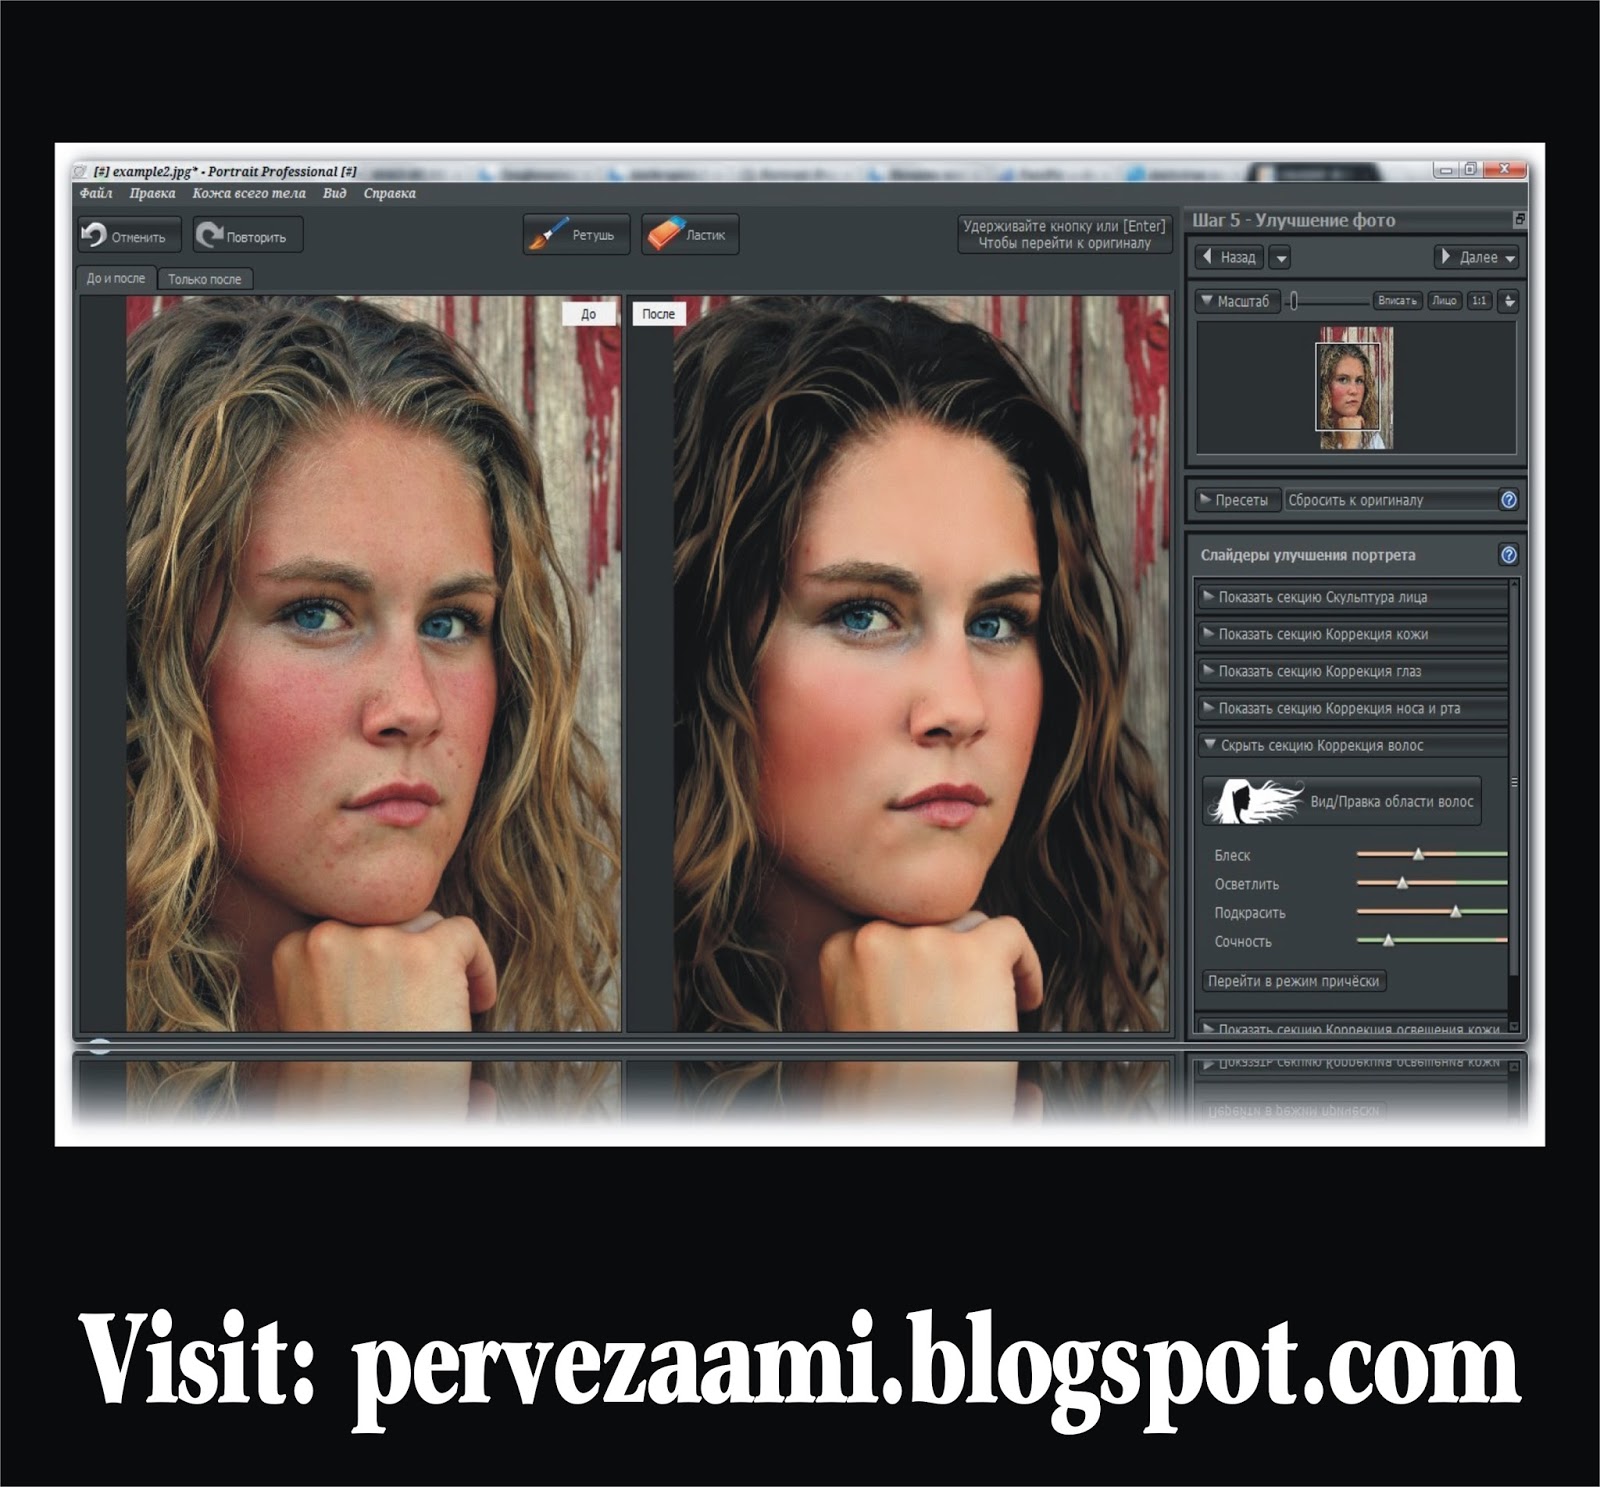 portrait professional studio download free